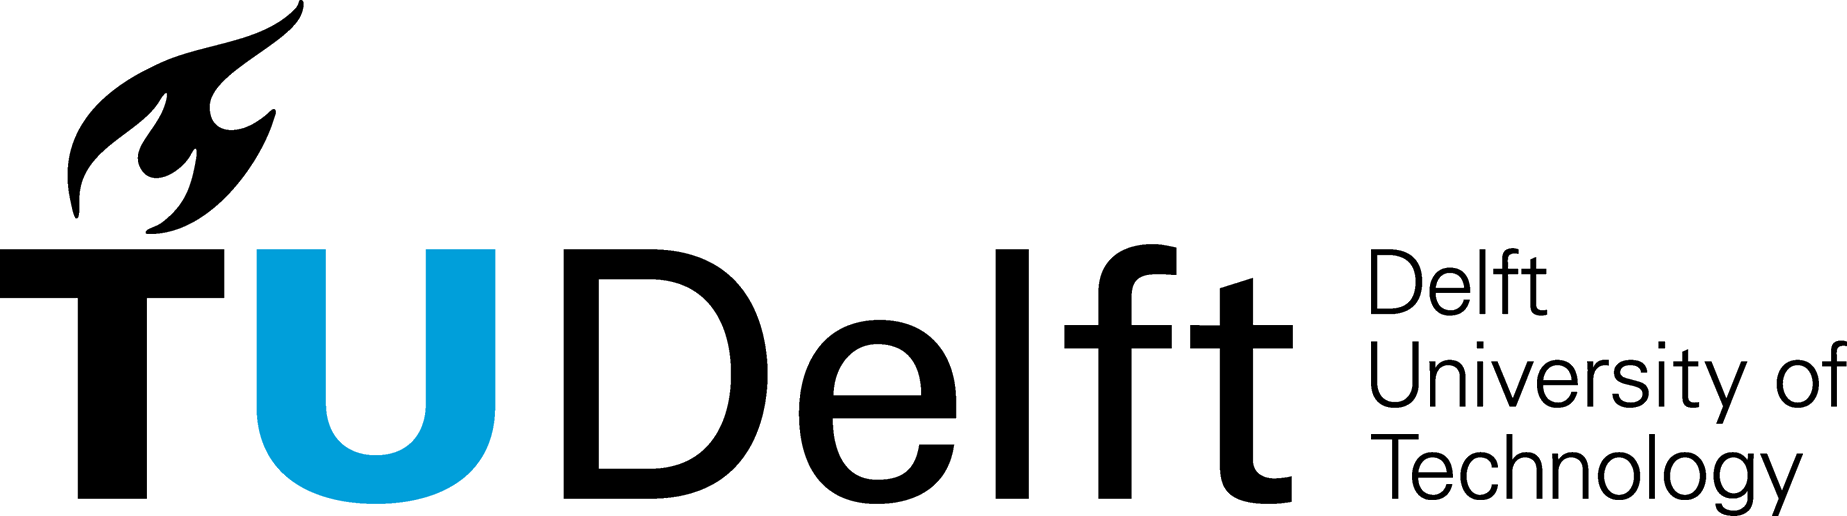 TU Delft logo transp